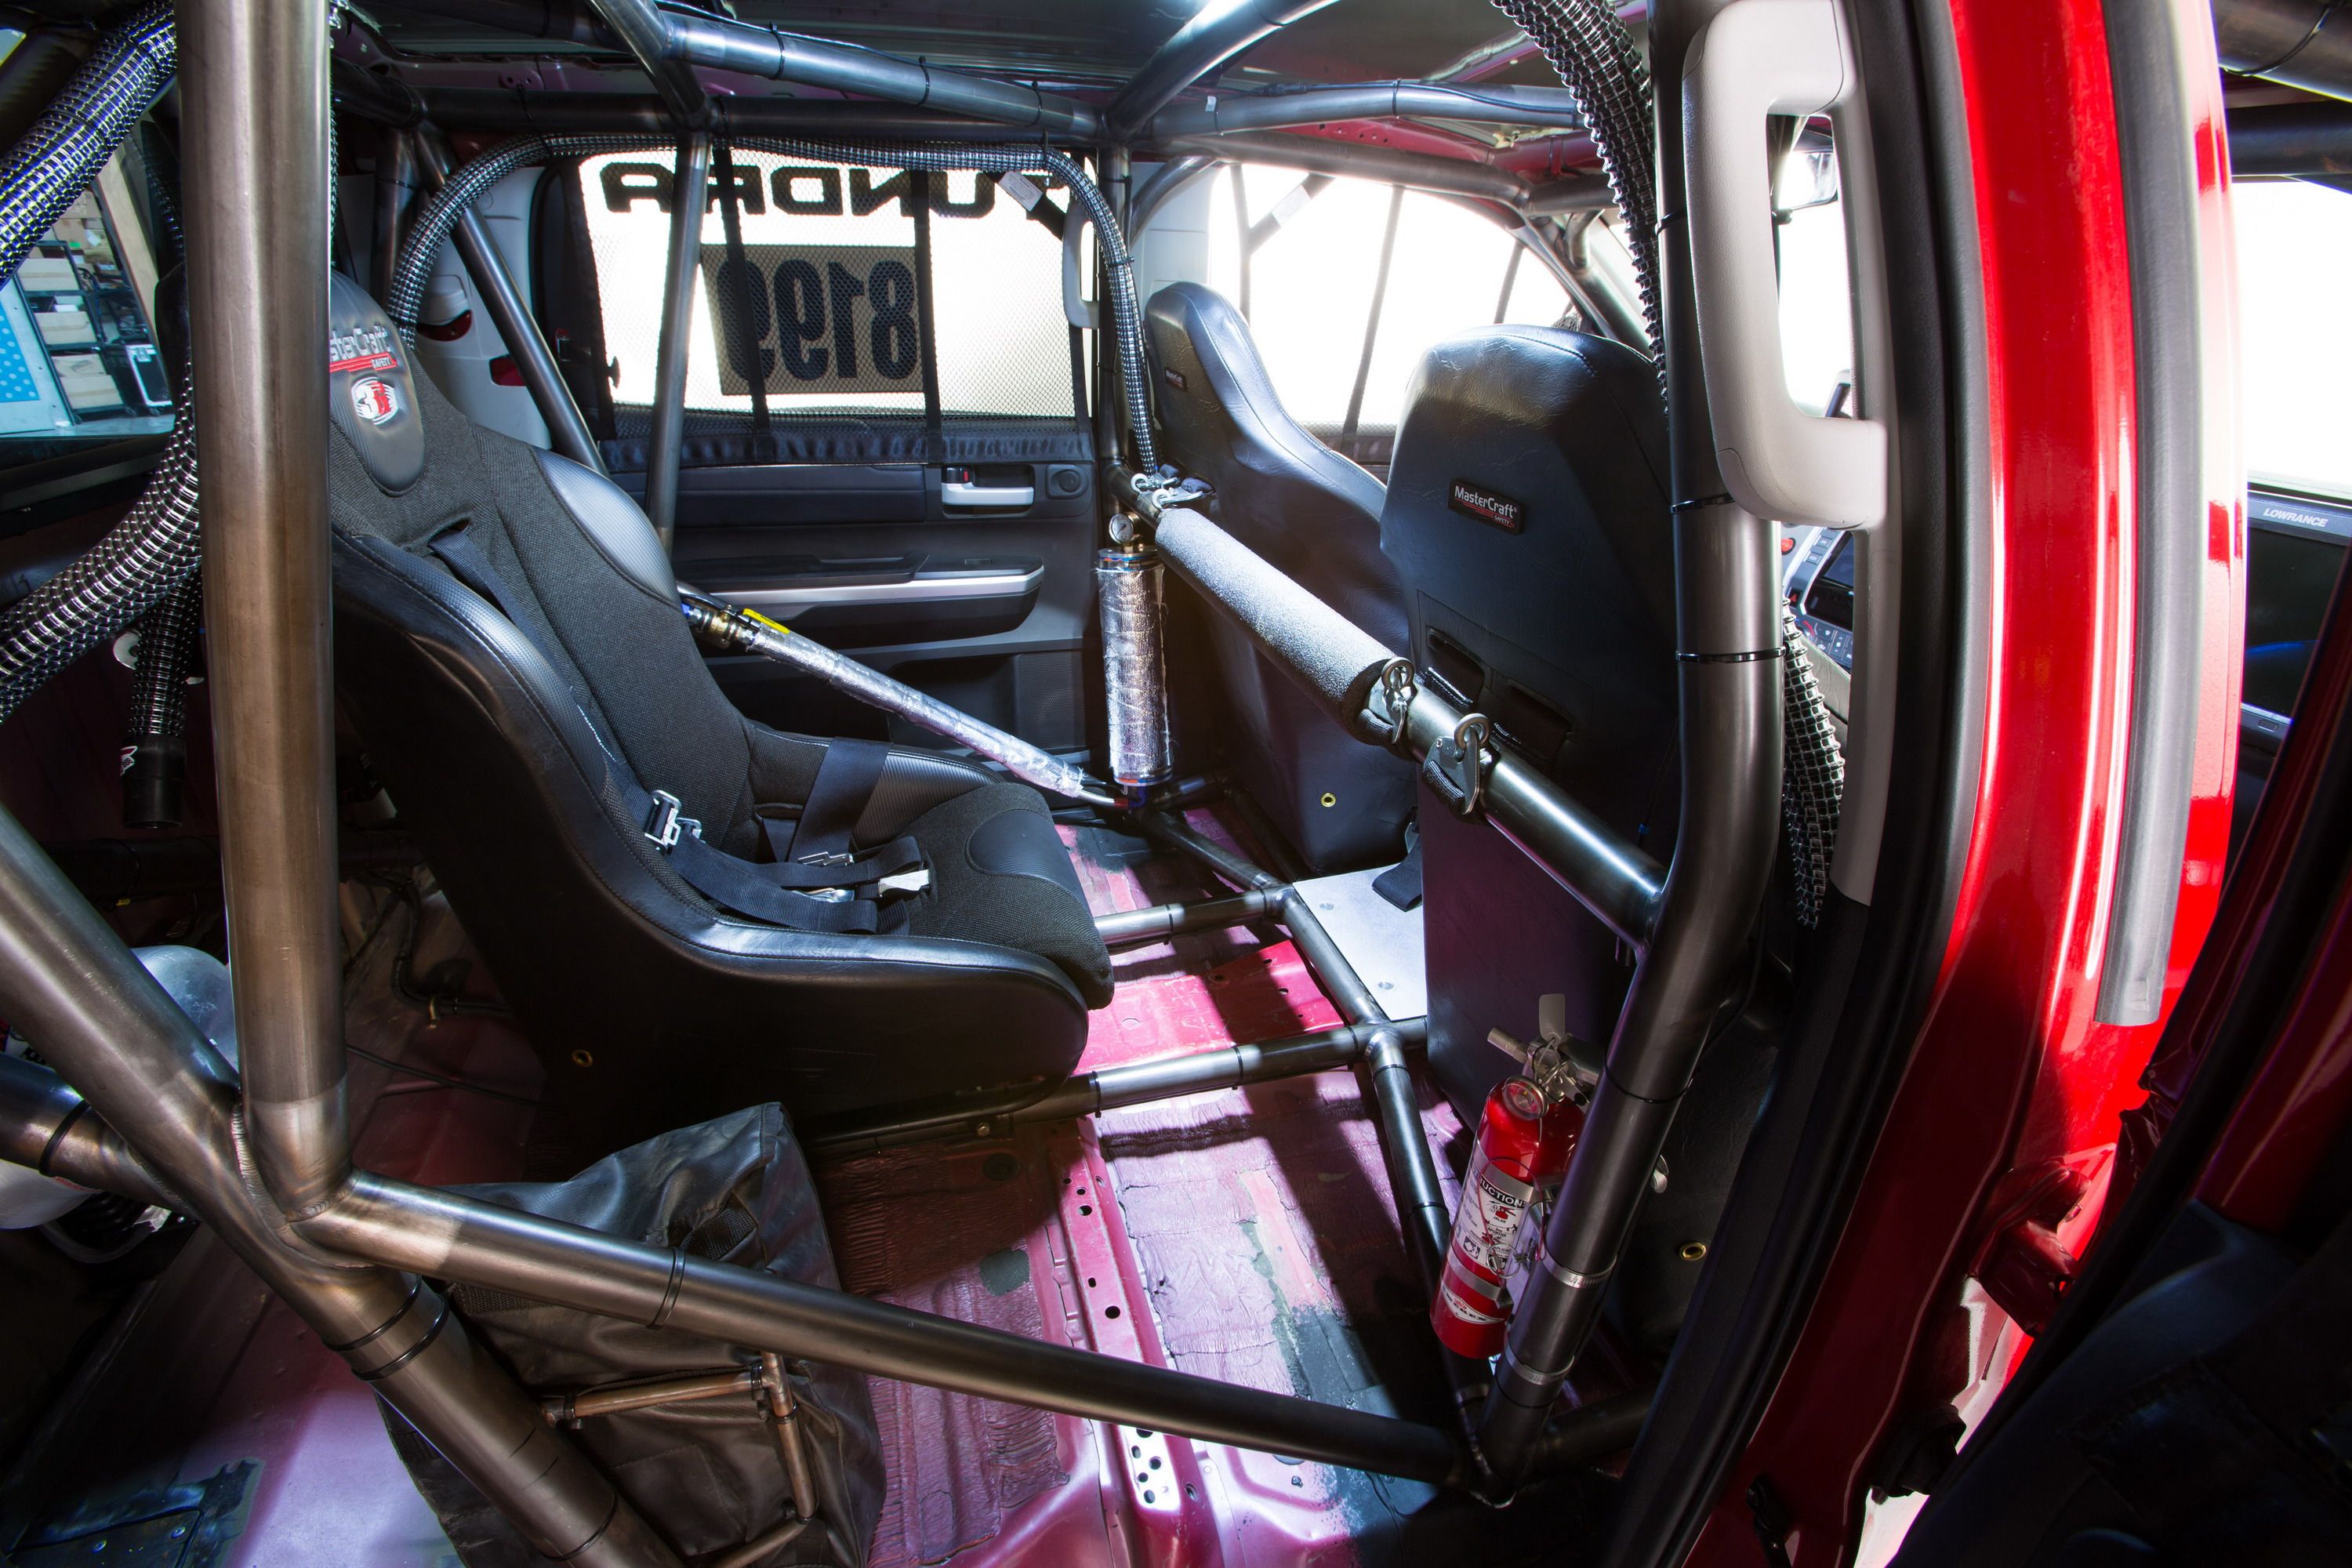 2015 Toyota Tundra TRD Pro Desert Race Truck